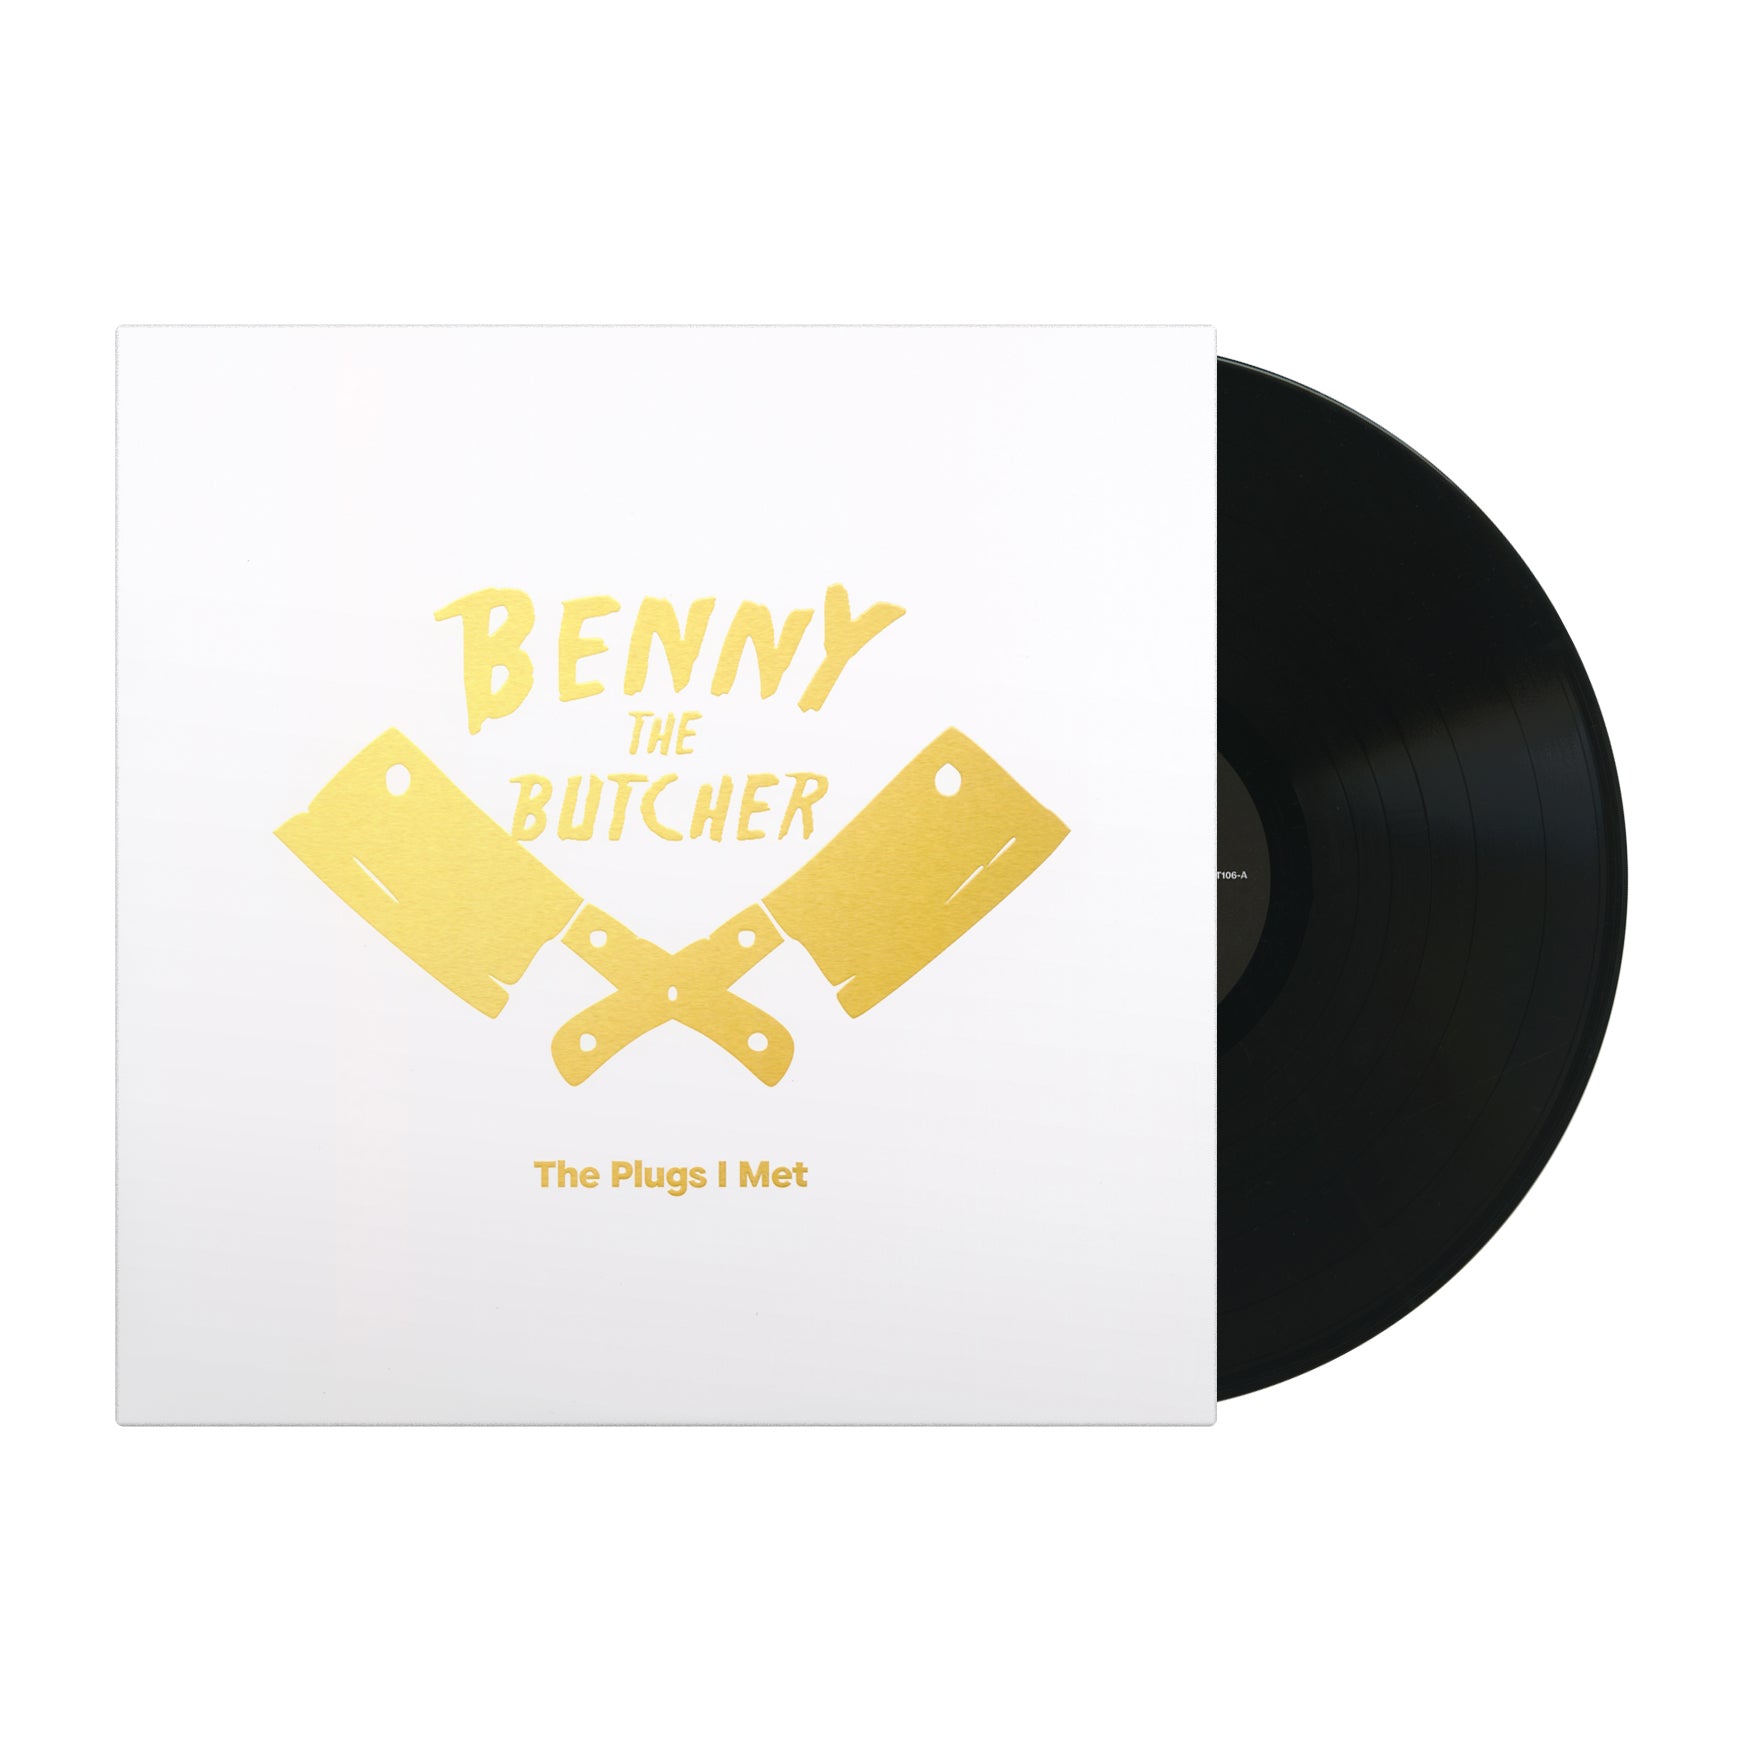 Benny – Tagged "Griselda Records"